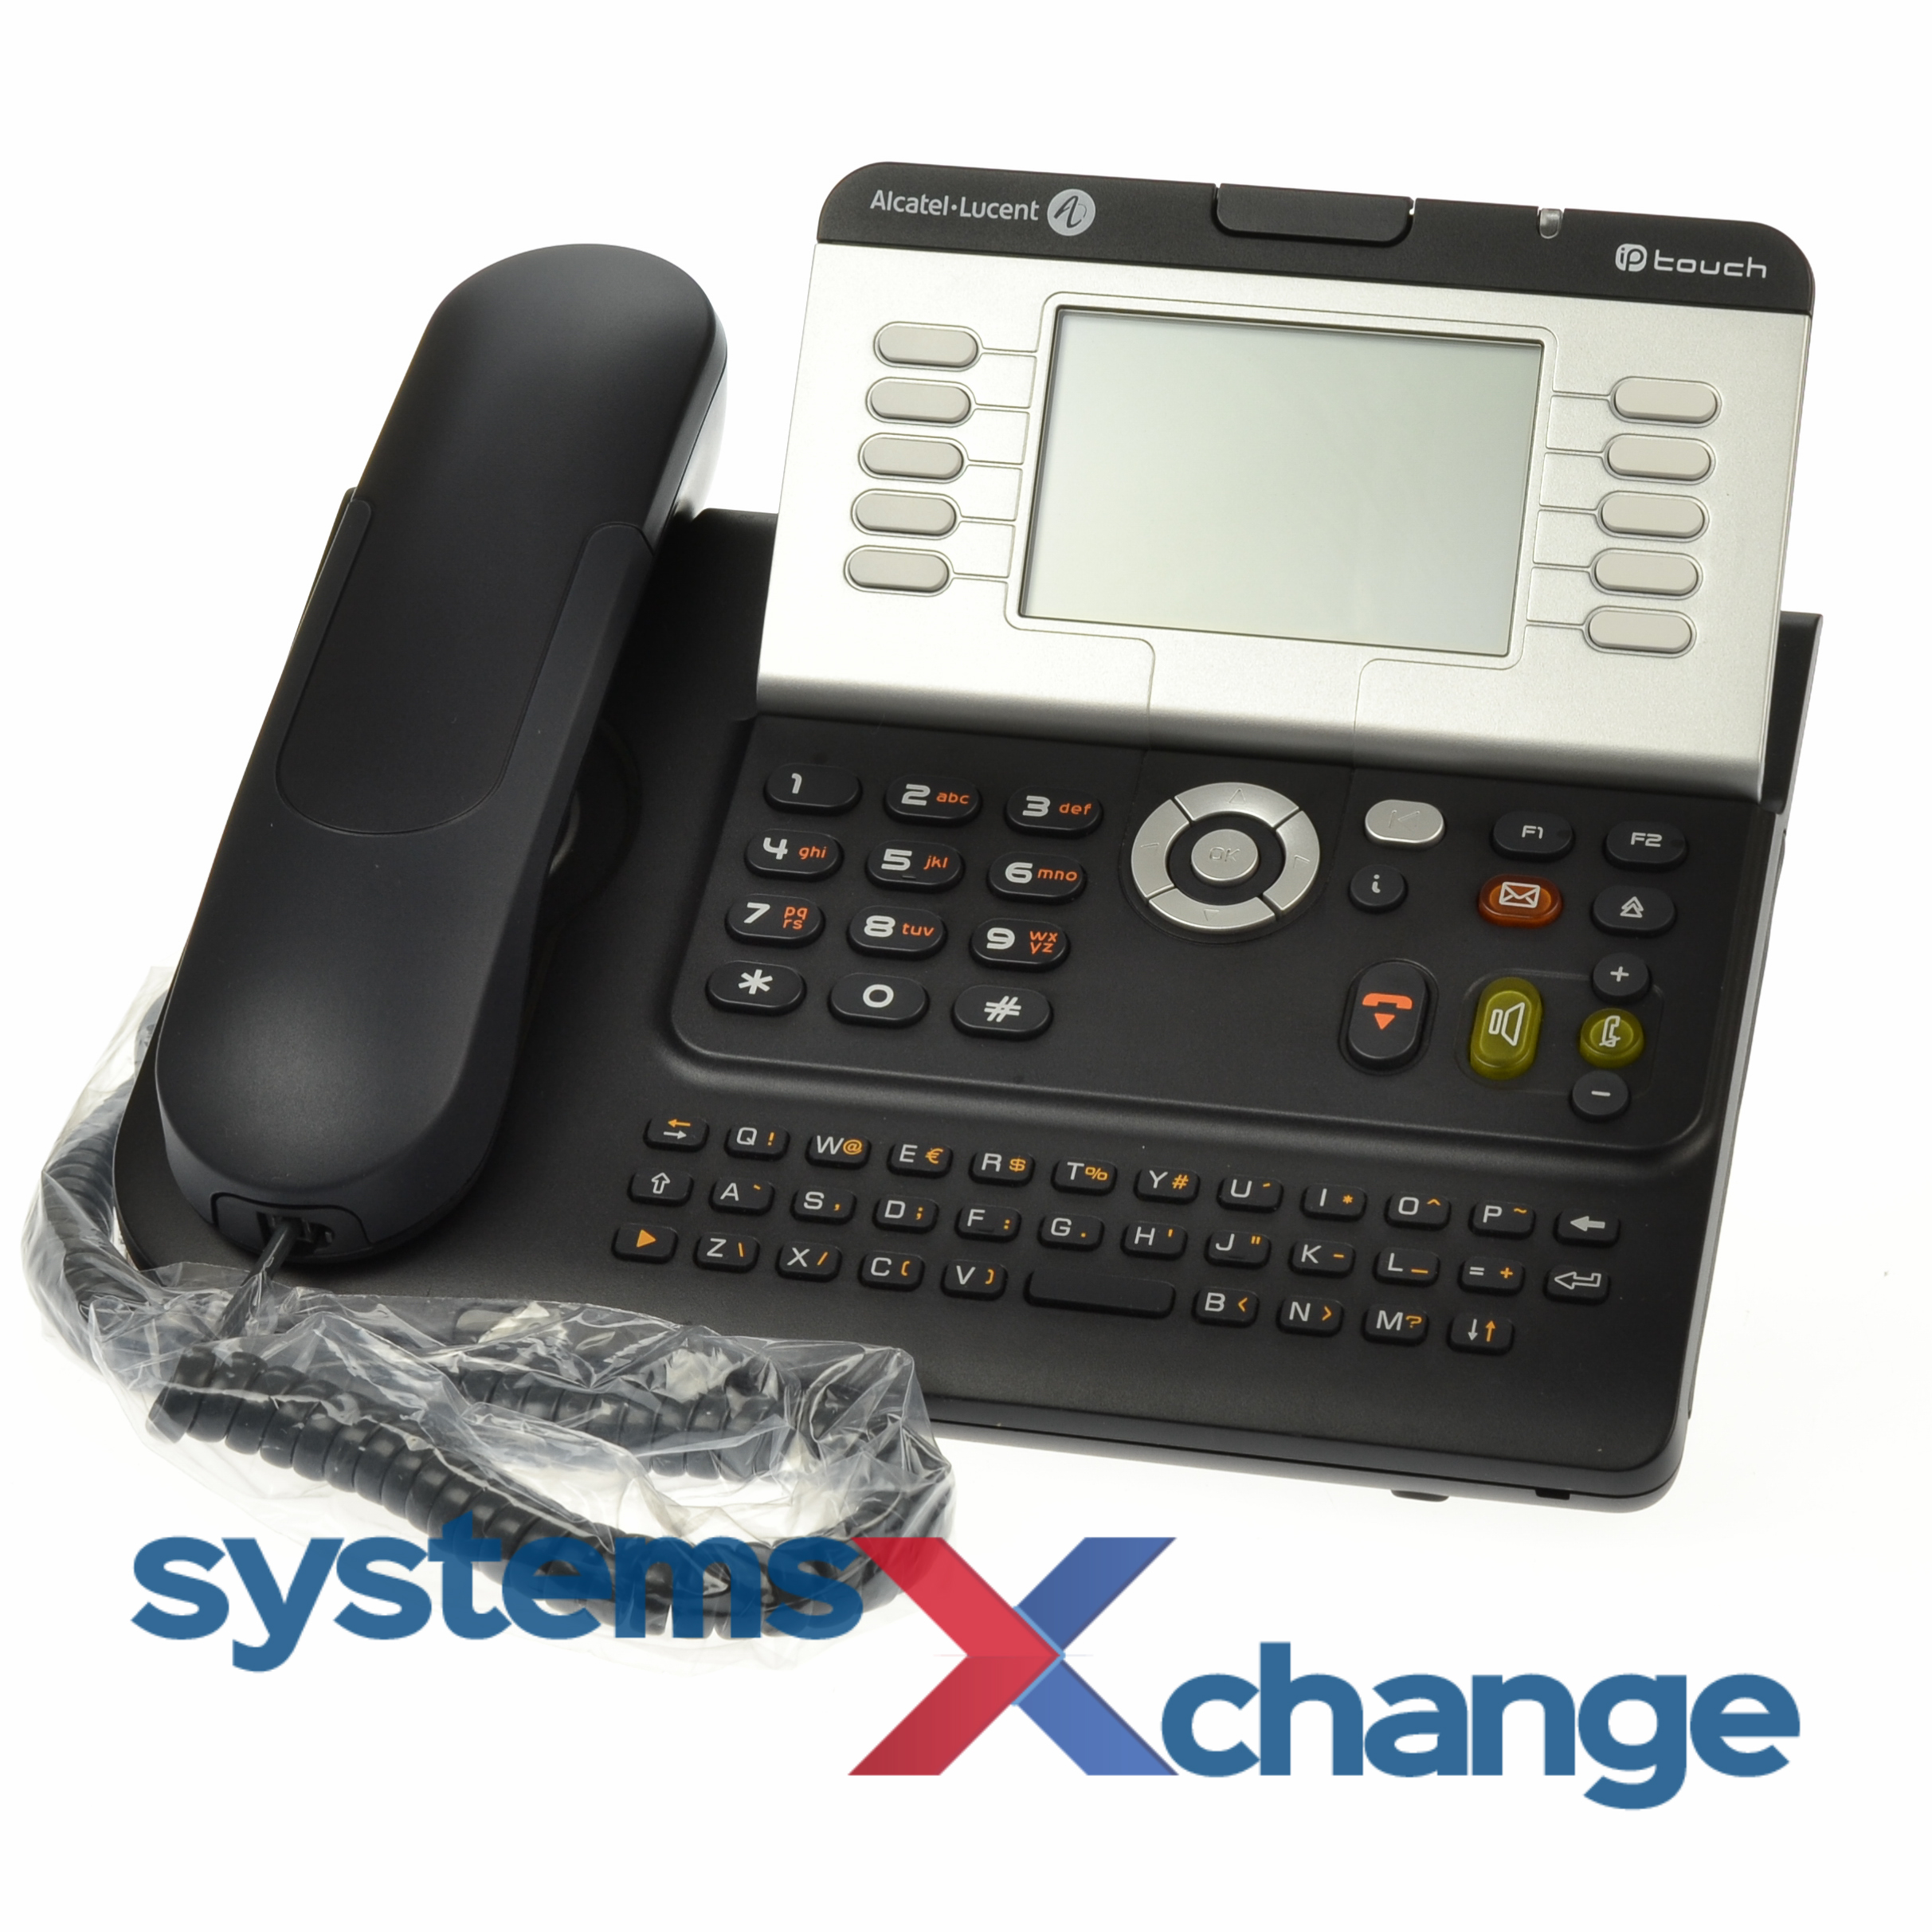 Стационарный телефон Alcatel 4018 цена. Защита ip телефона